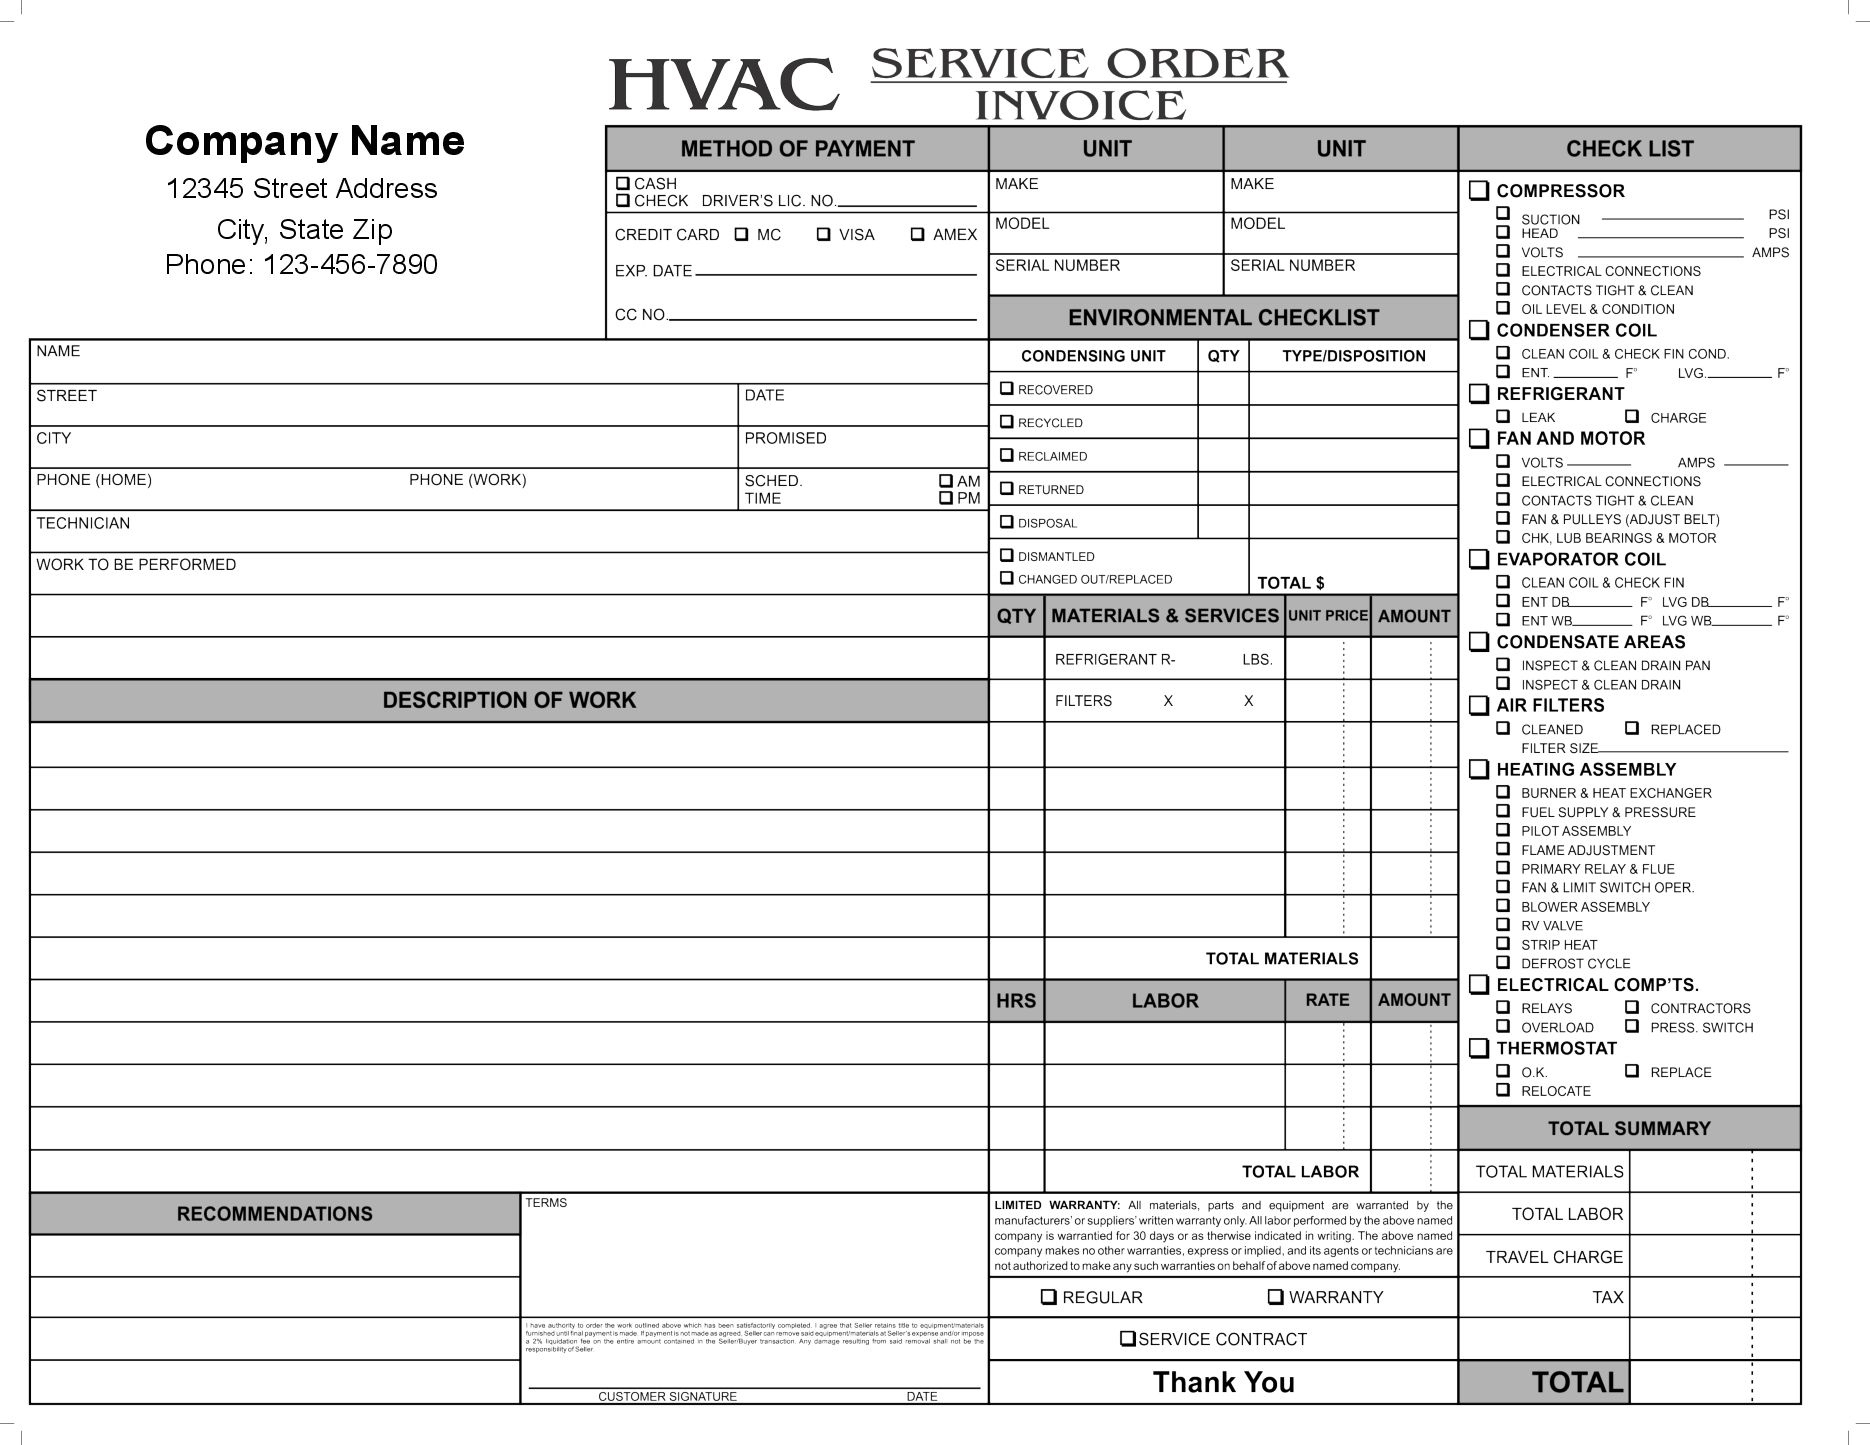 11 Hvac Invoice Template Free Top Invoice Templates Hvac pertaining to Hvac Service Order Invoice Template